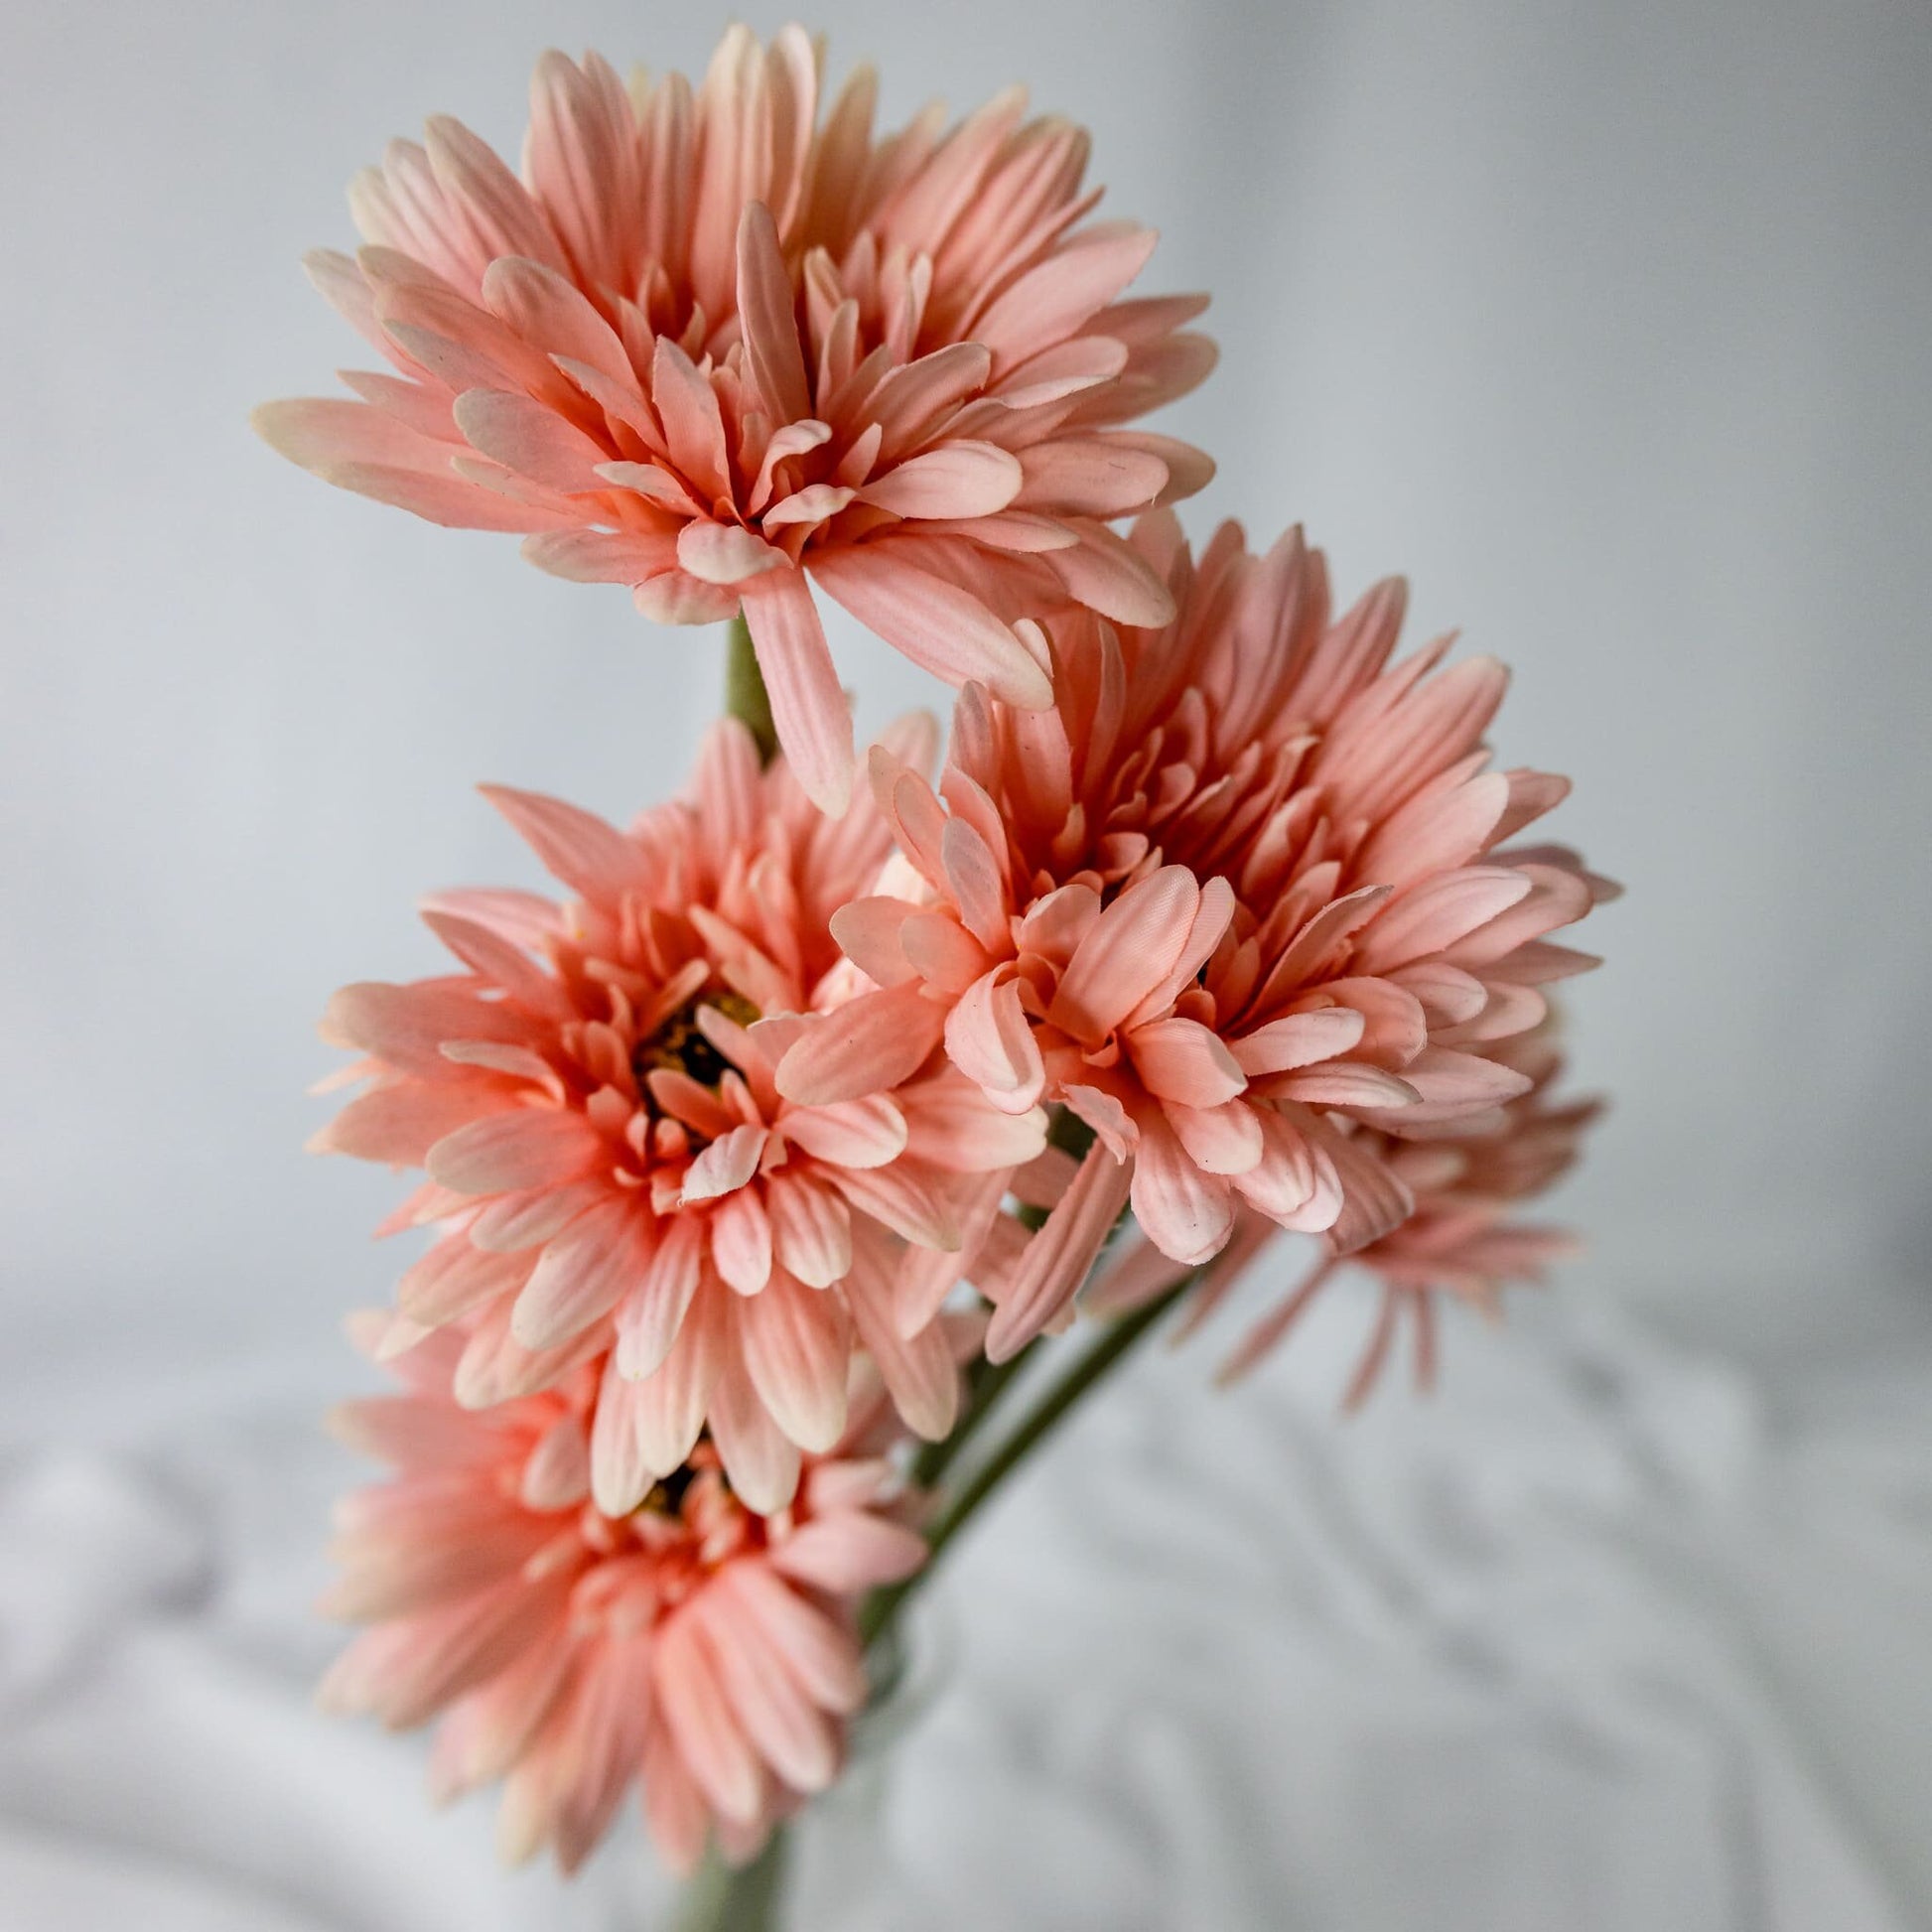 Artificial pale pink gerbera flowers